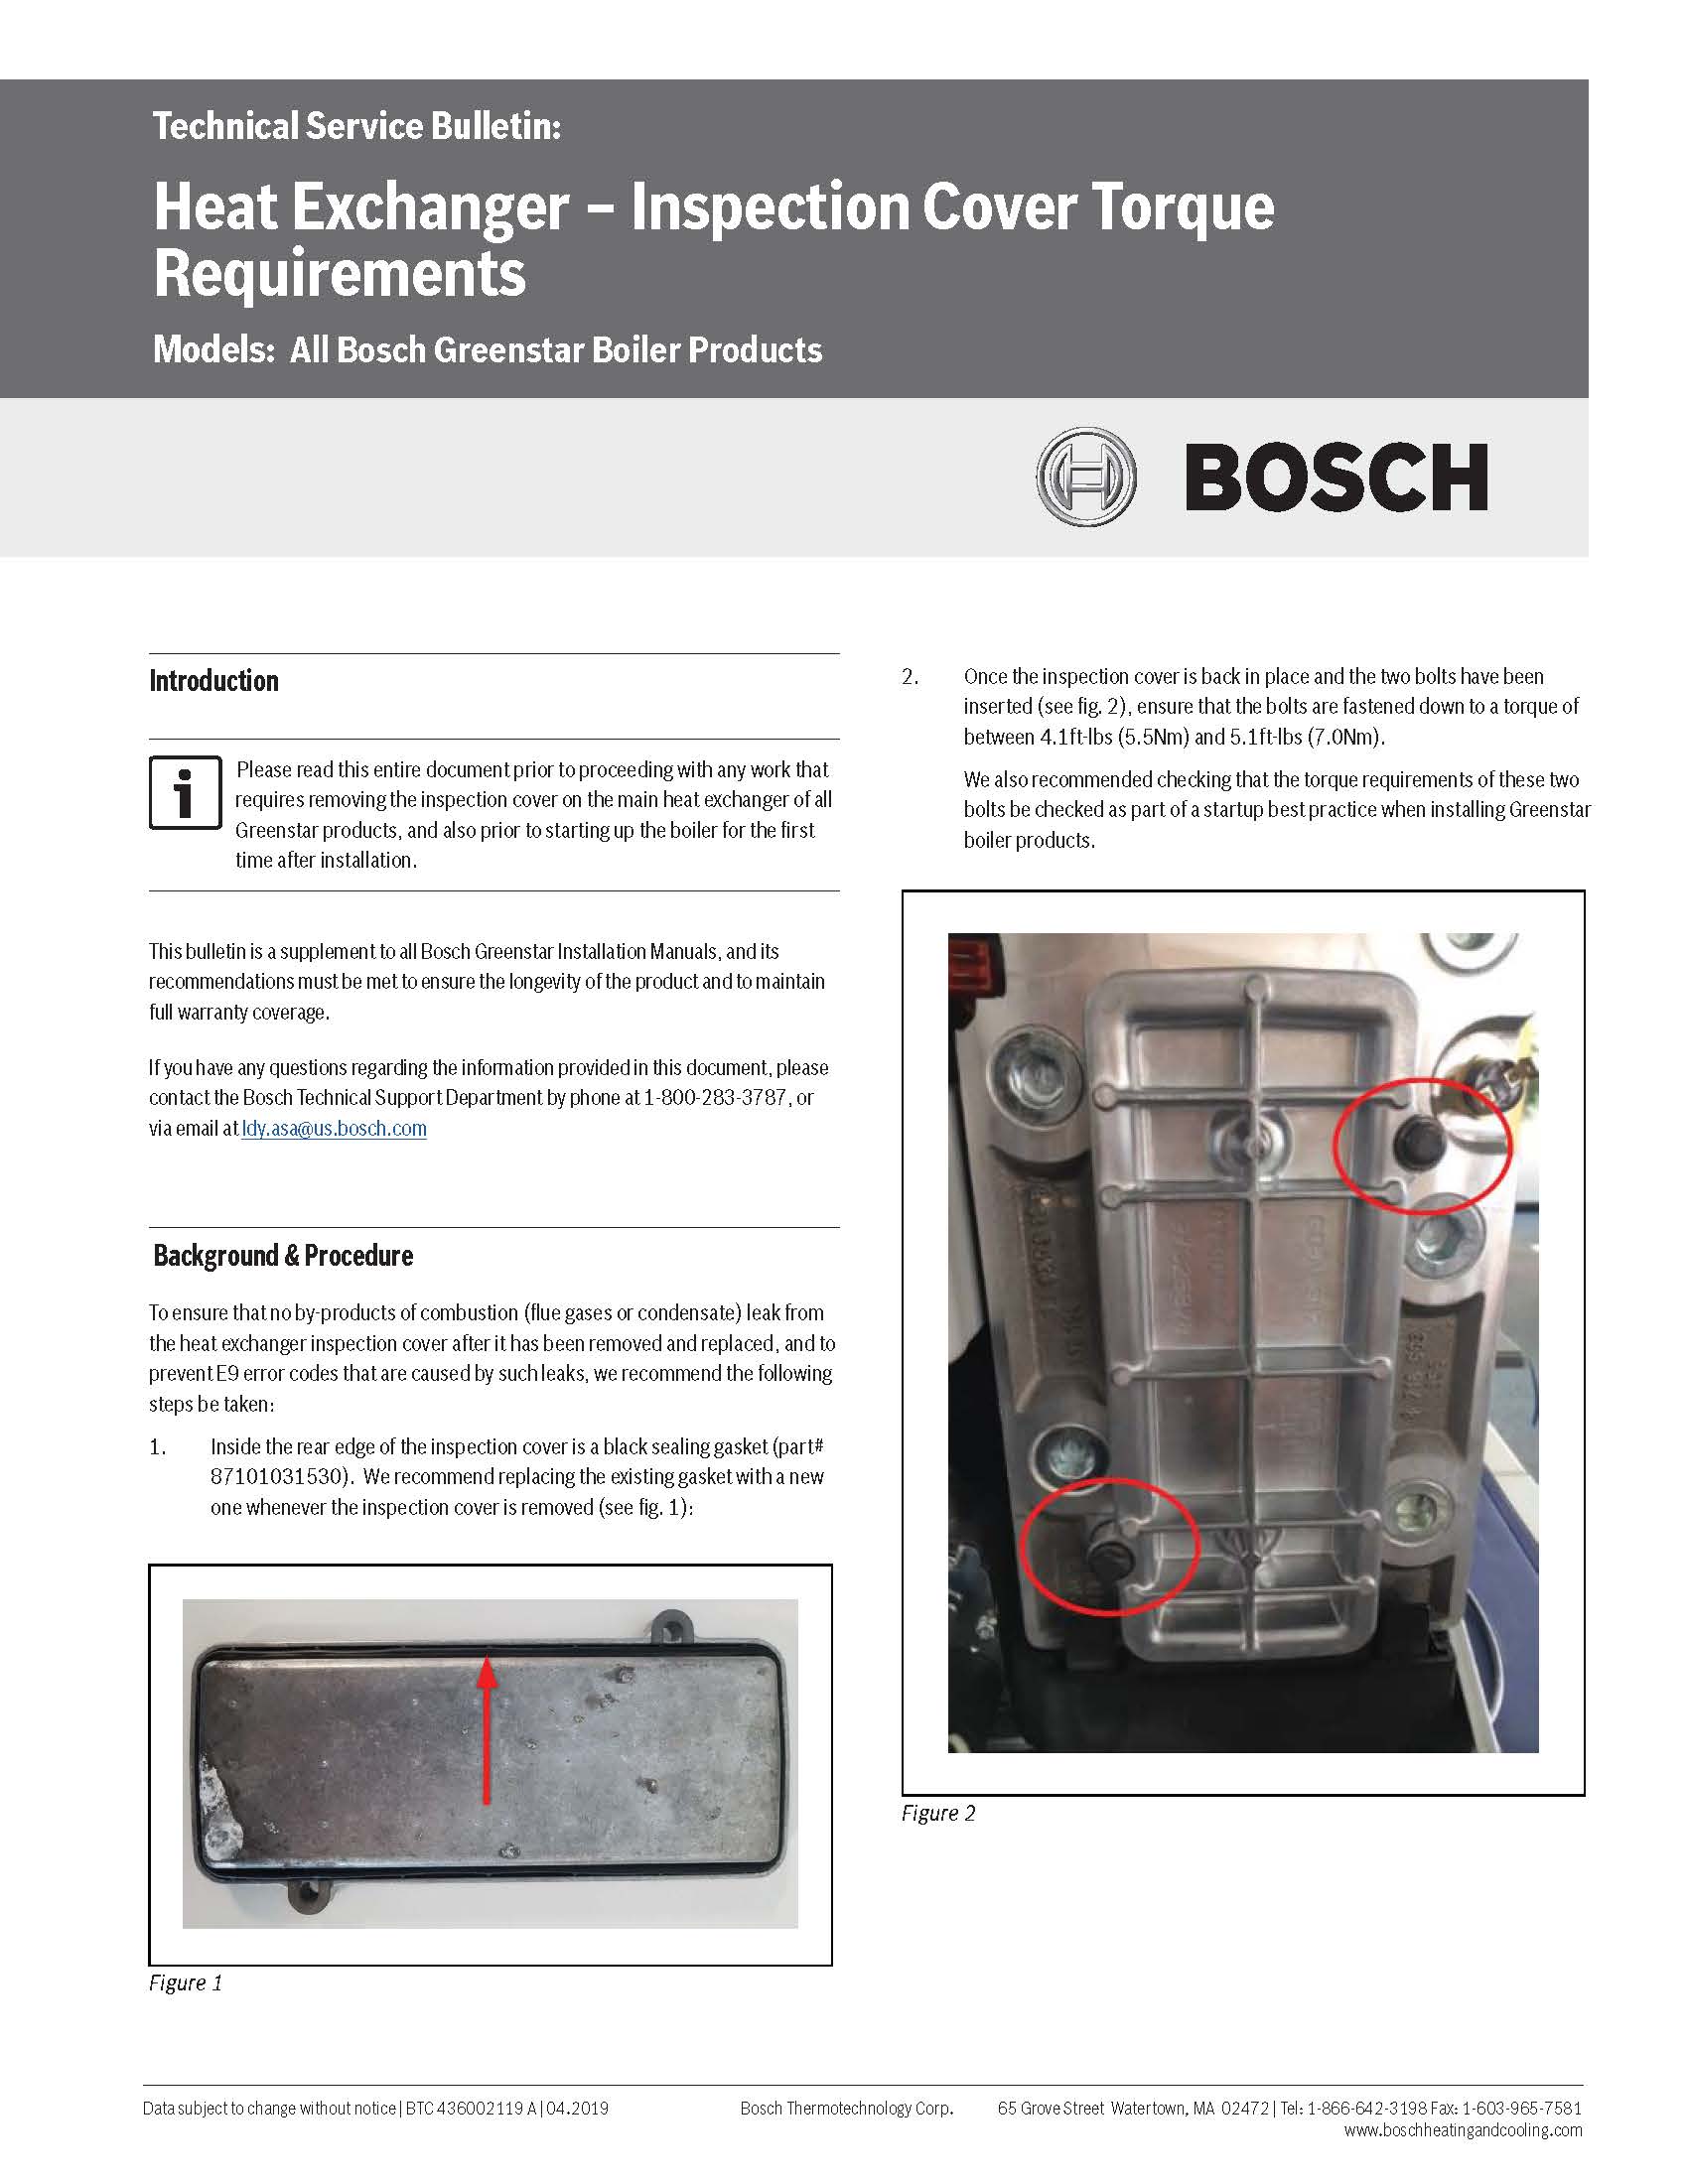 Bosch greenstar boiler heat exchanger inspection requirements 